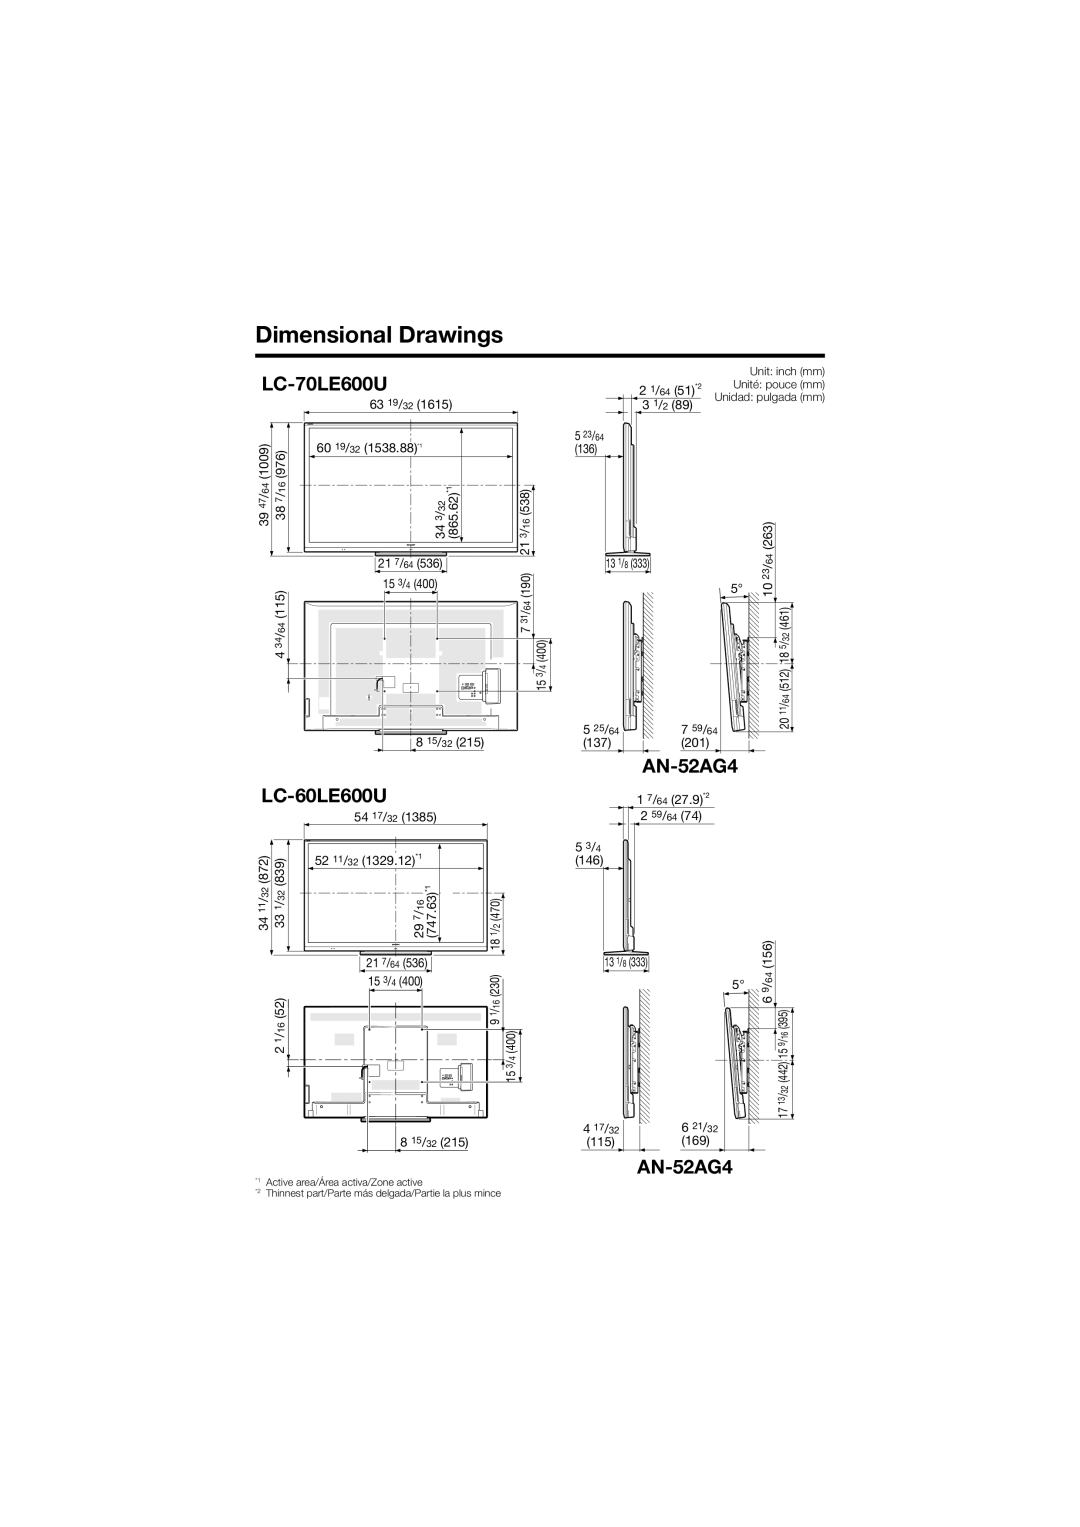 Sharp LC-60LE600U operation manual Dimensional Drawings, LC-70LE600U, AN-52AG4 